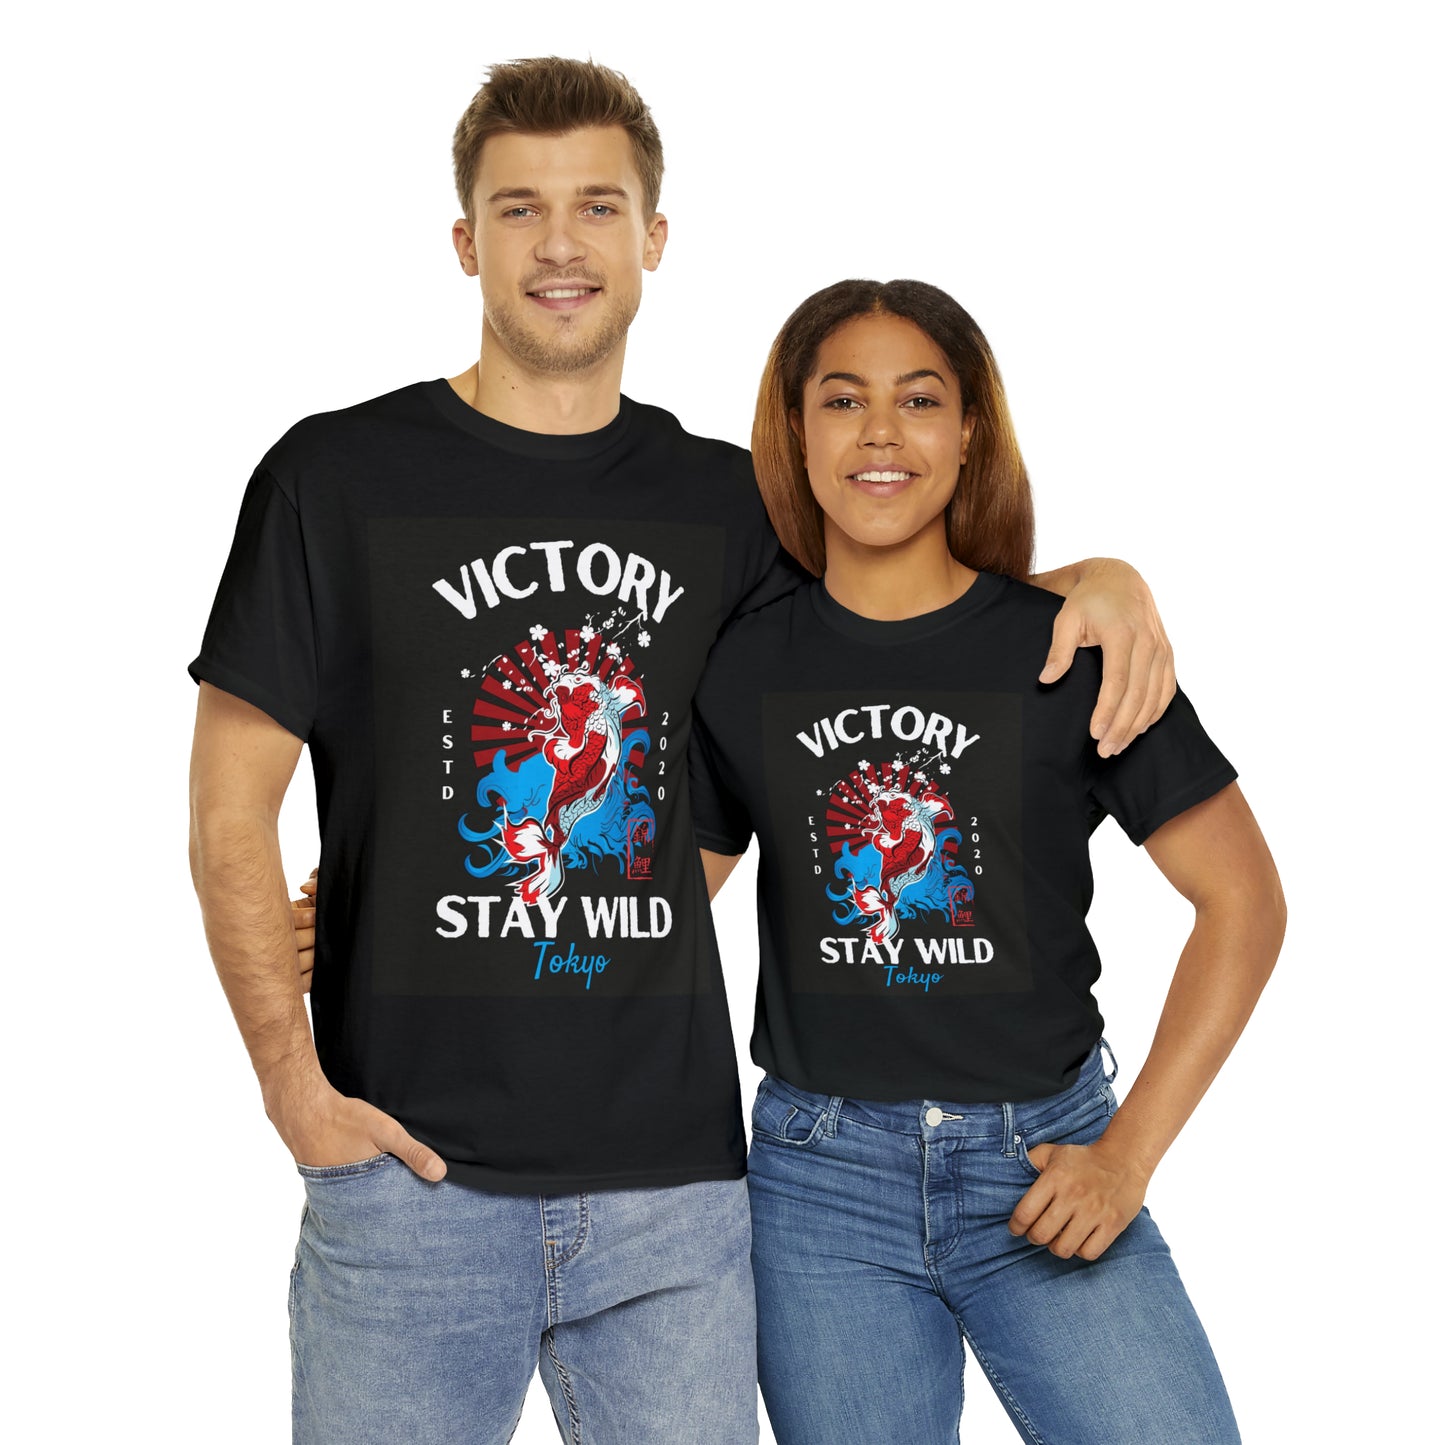 "Victory Stay Wild" Unisex Heavy Cotton Tee Shirt*